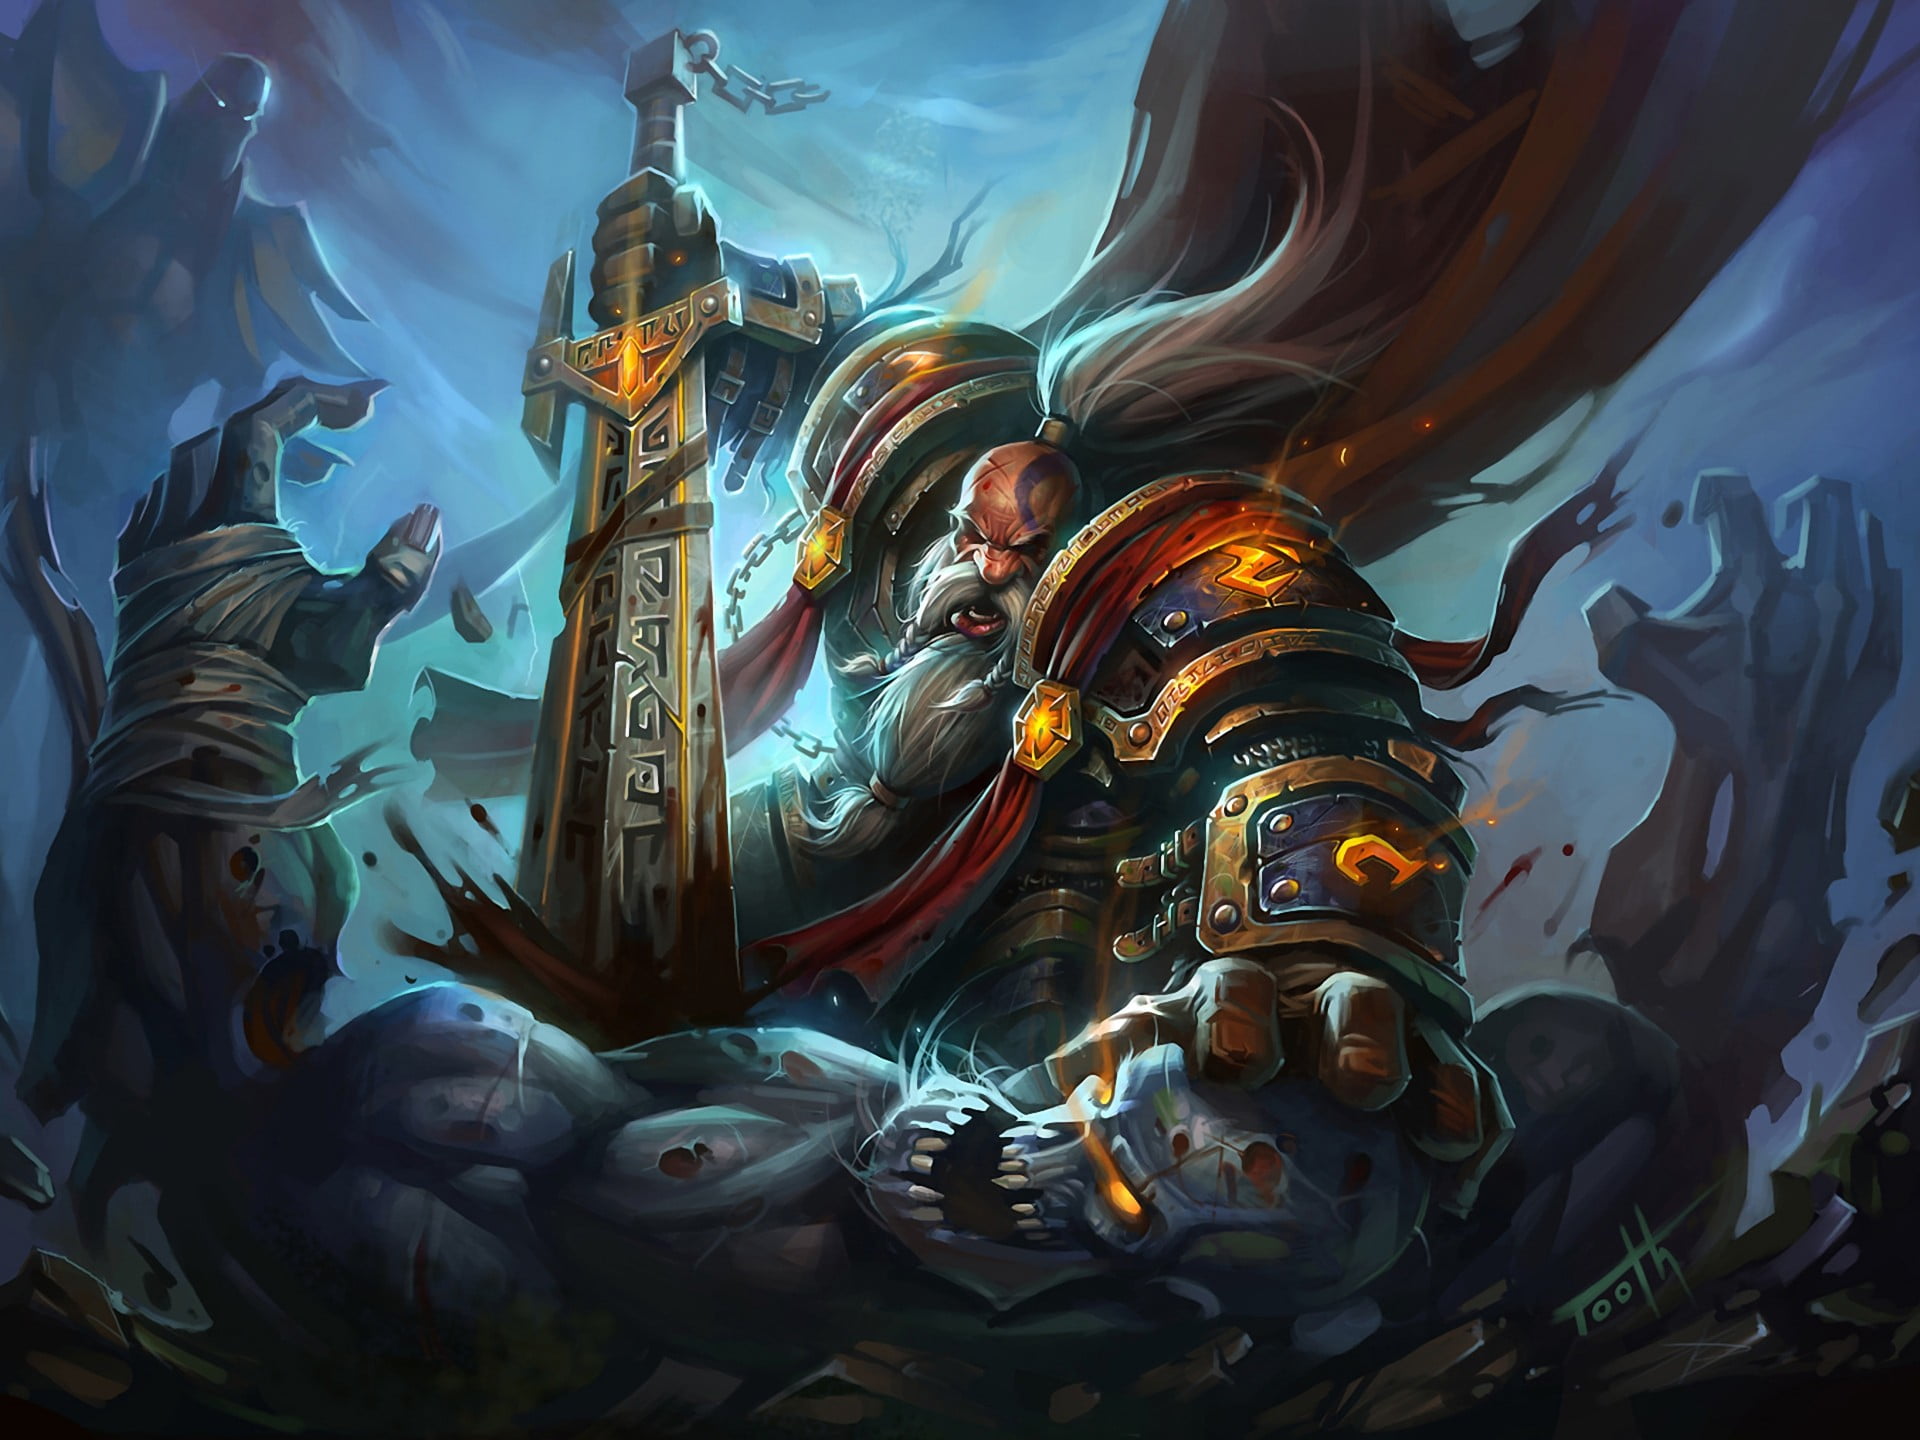 monster character online game wallpaper, dwarfs, Paladin, World of Warcraft, Best tag  kkkkkkk